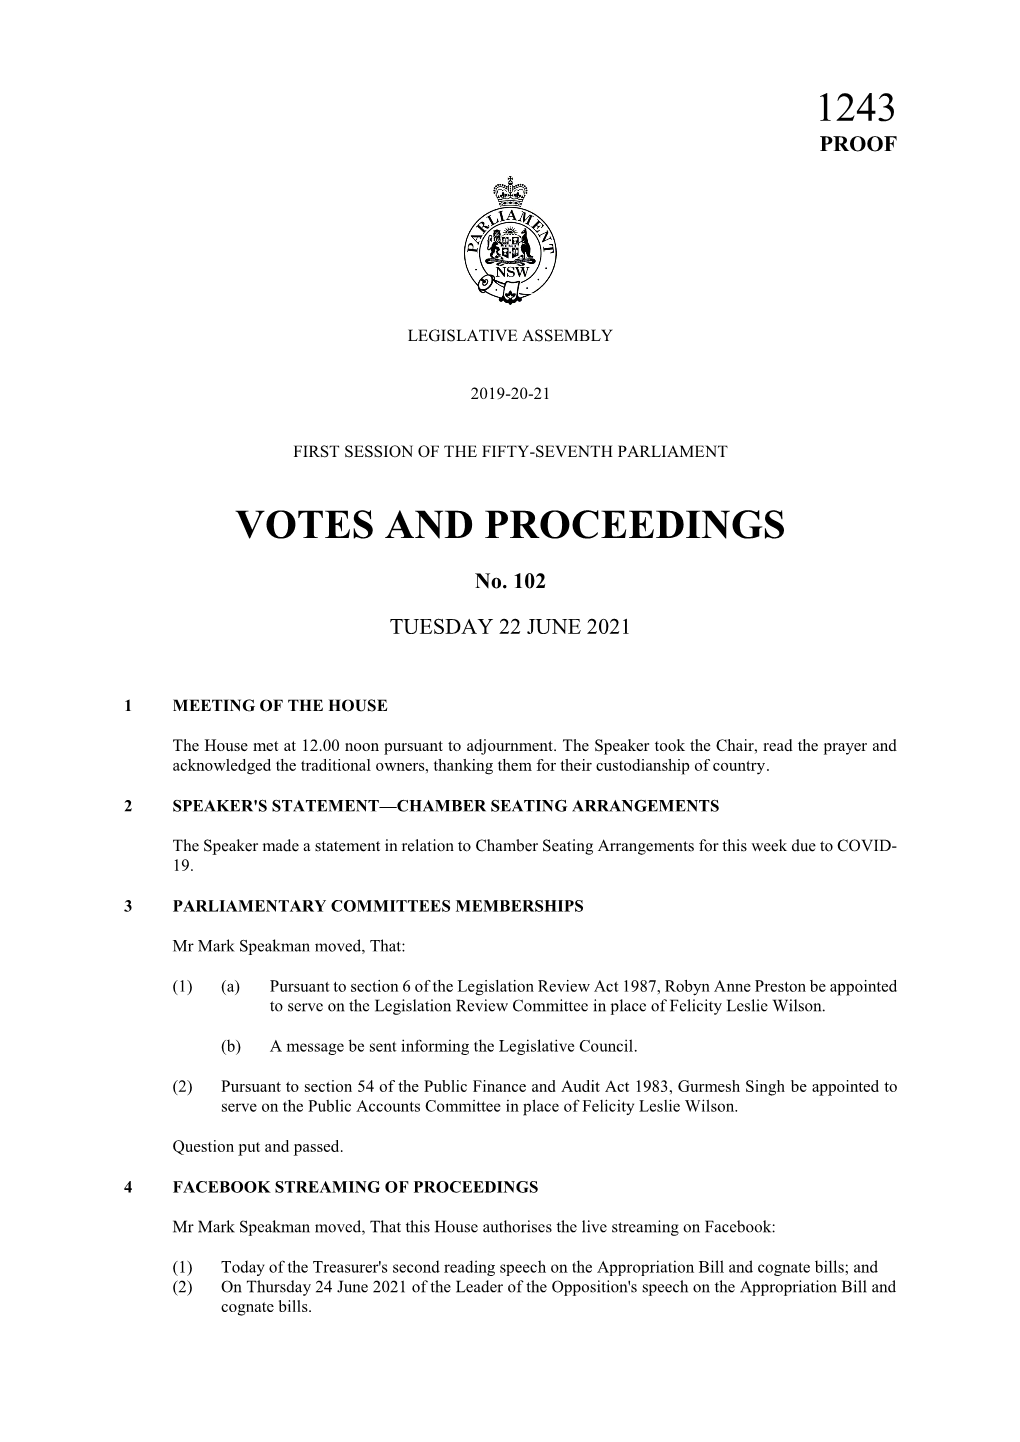 Votes and Proceedings No